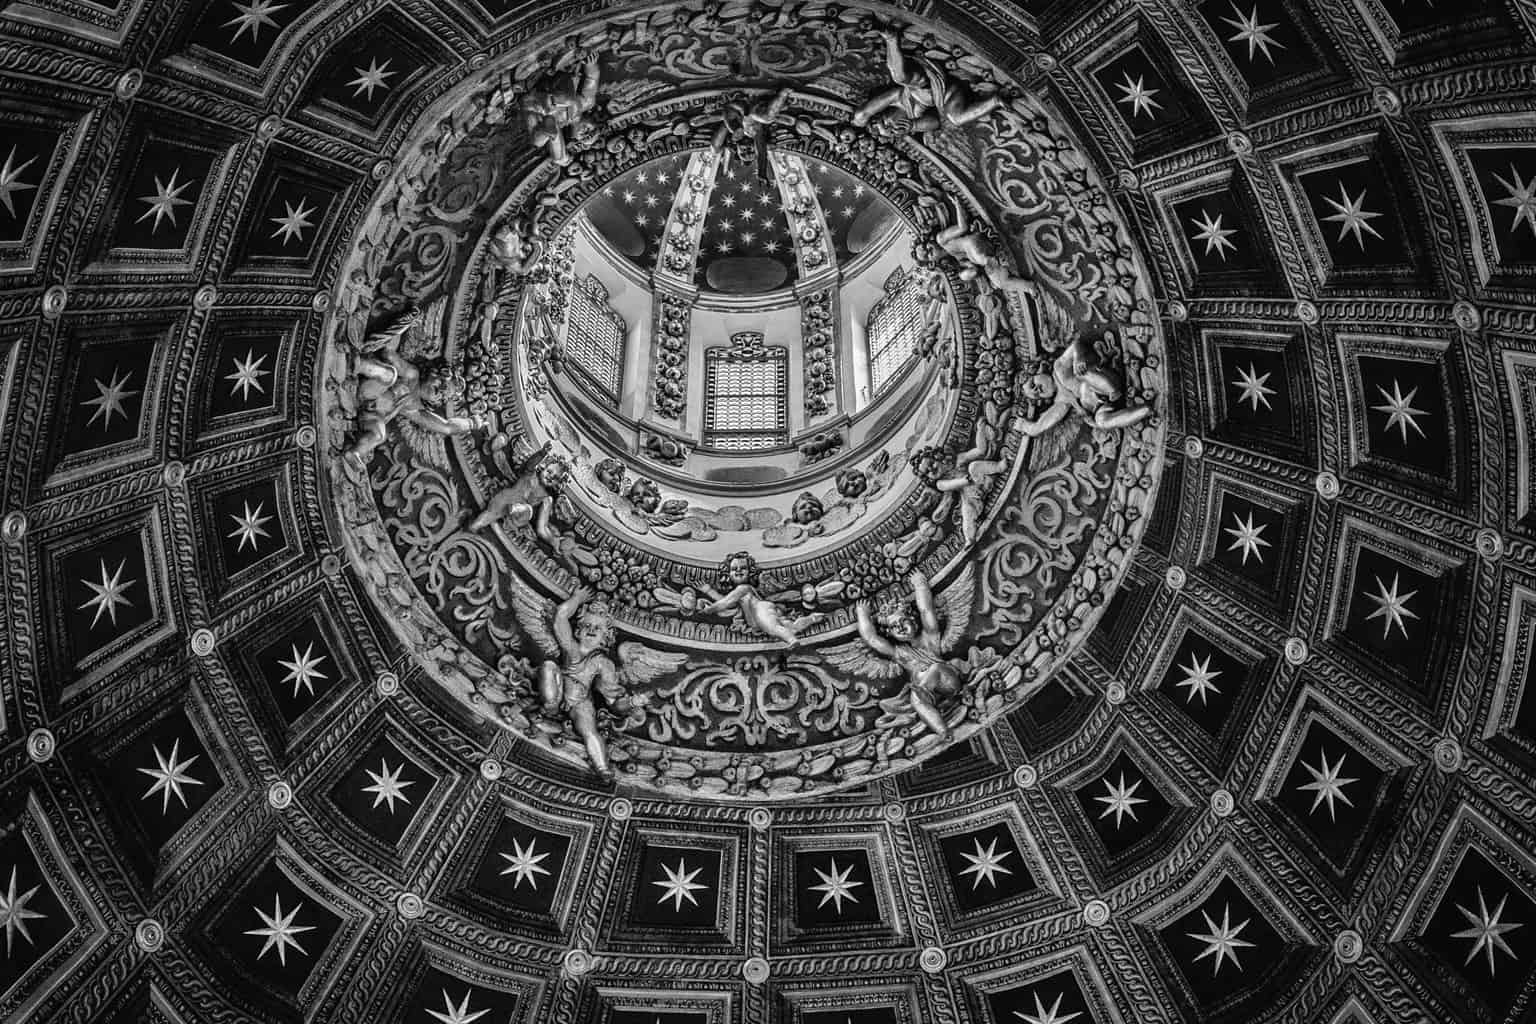  Siena Duomo Ceiling. Stunning.  